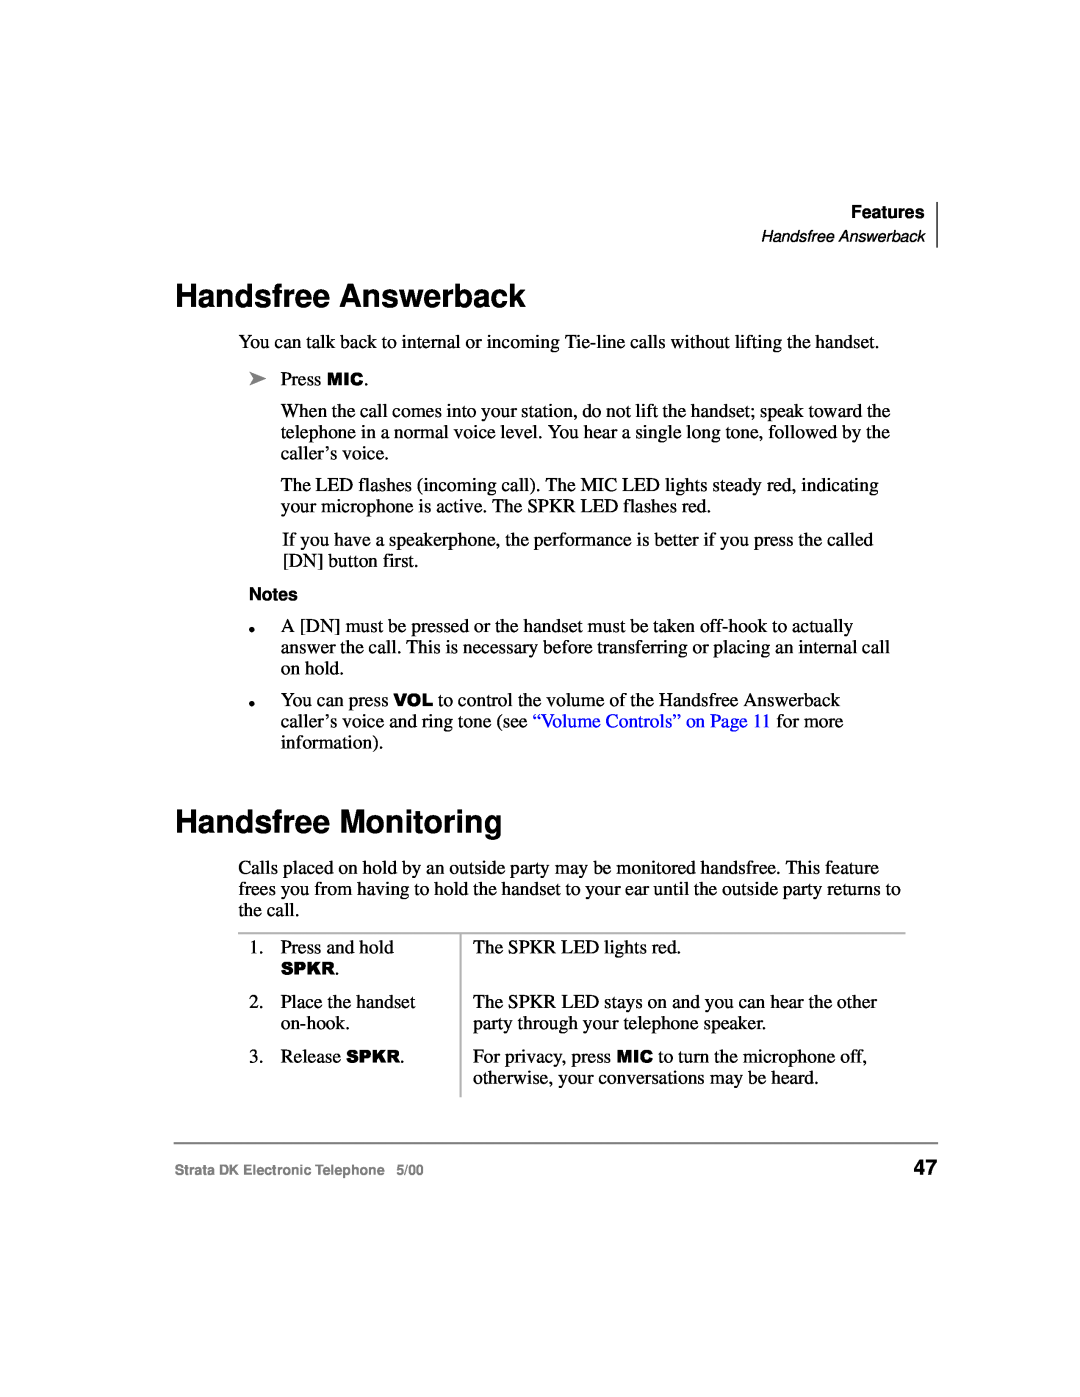 Toshiba Strata DK manual Handsfree Answerback, Handsfree Monitoring 